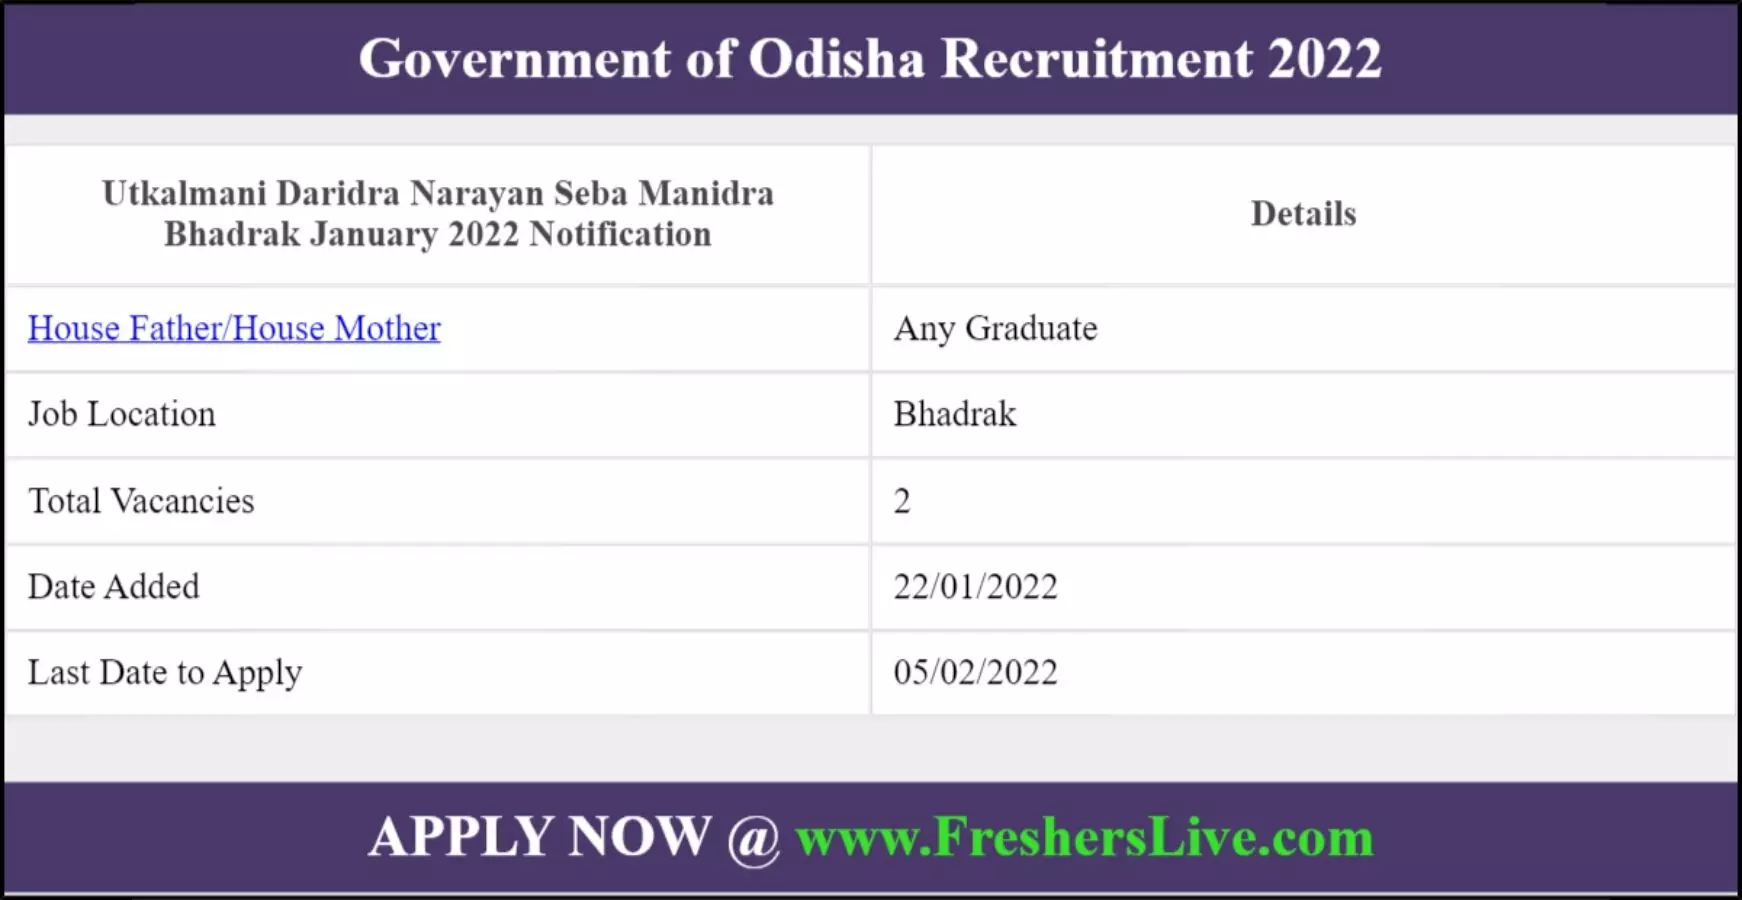 Odisha Government Job Notification 2022 eligibility criteria